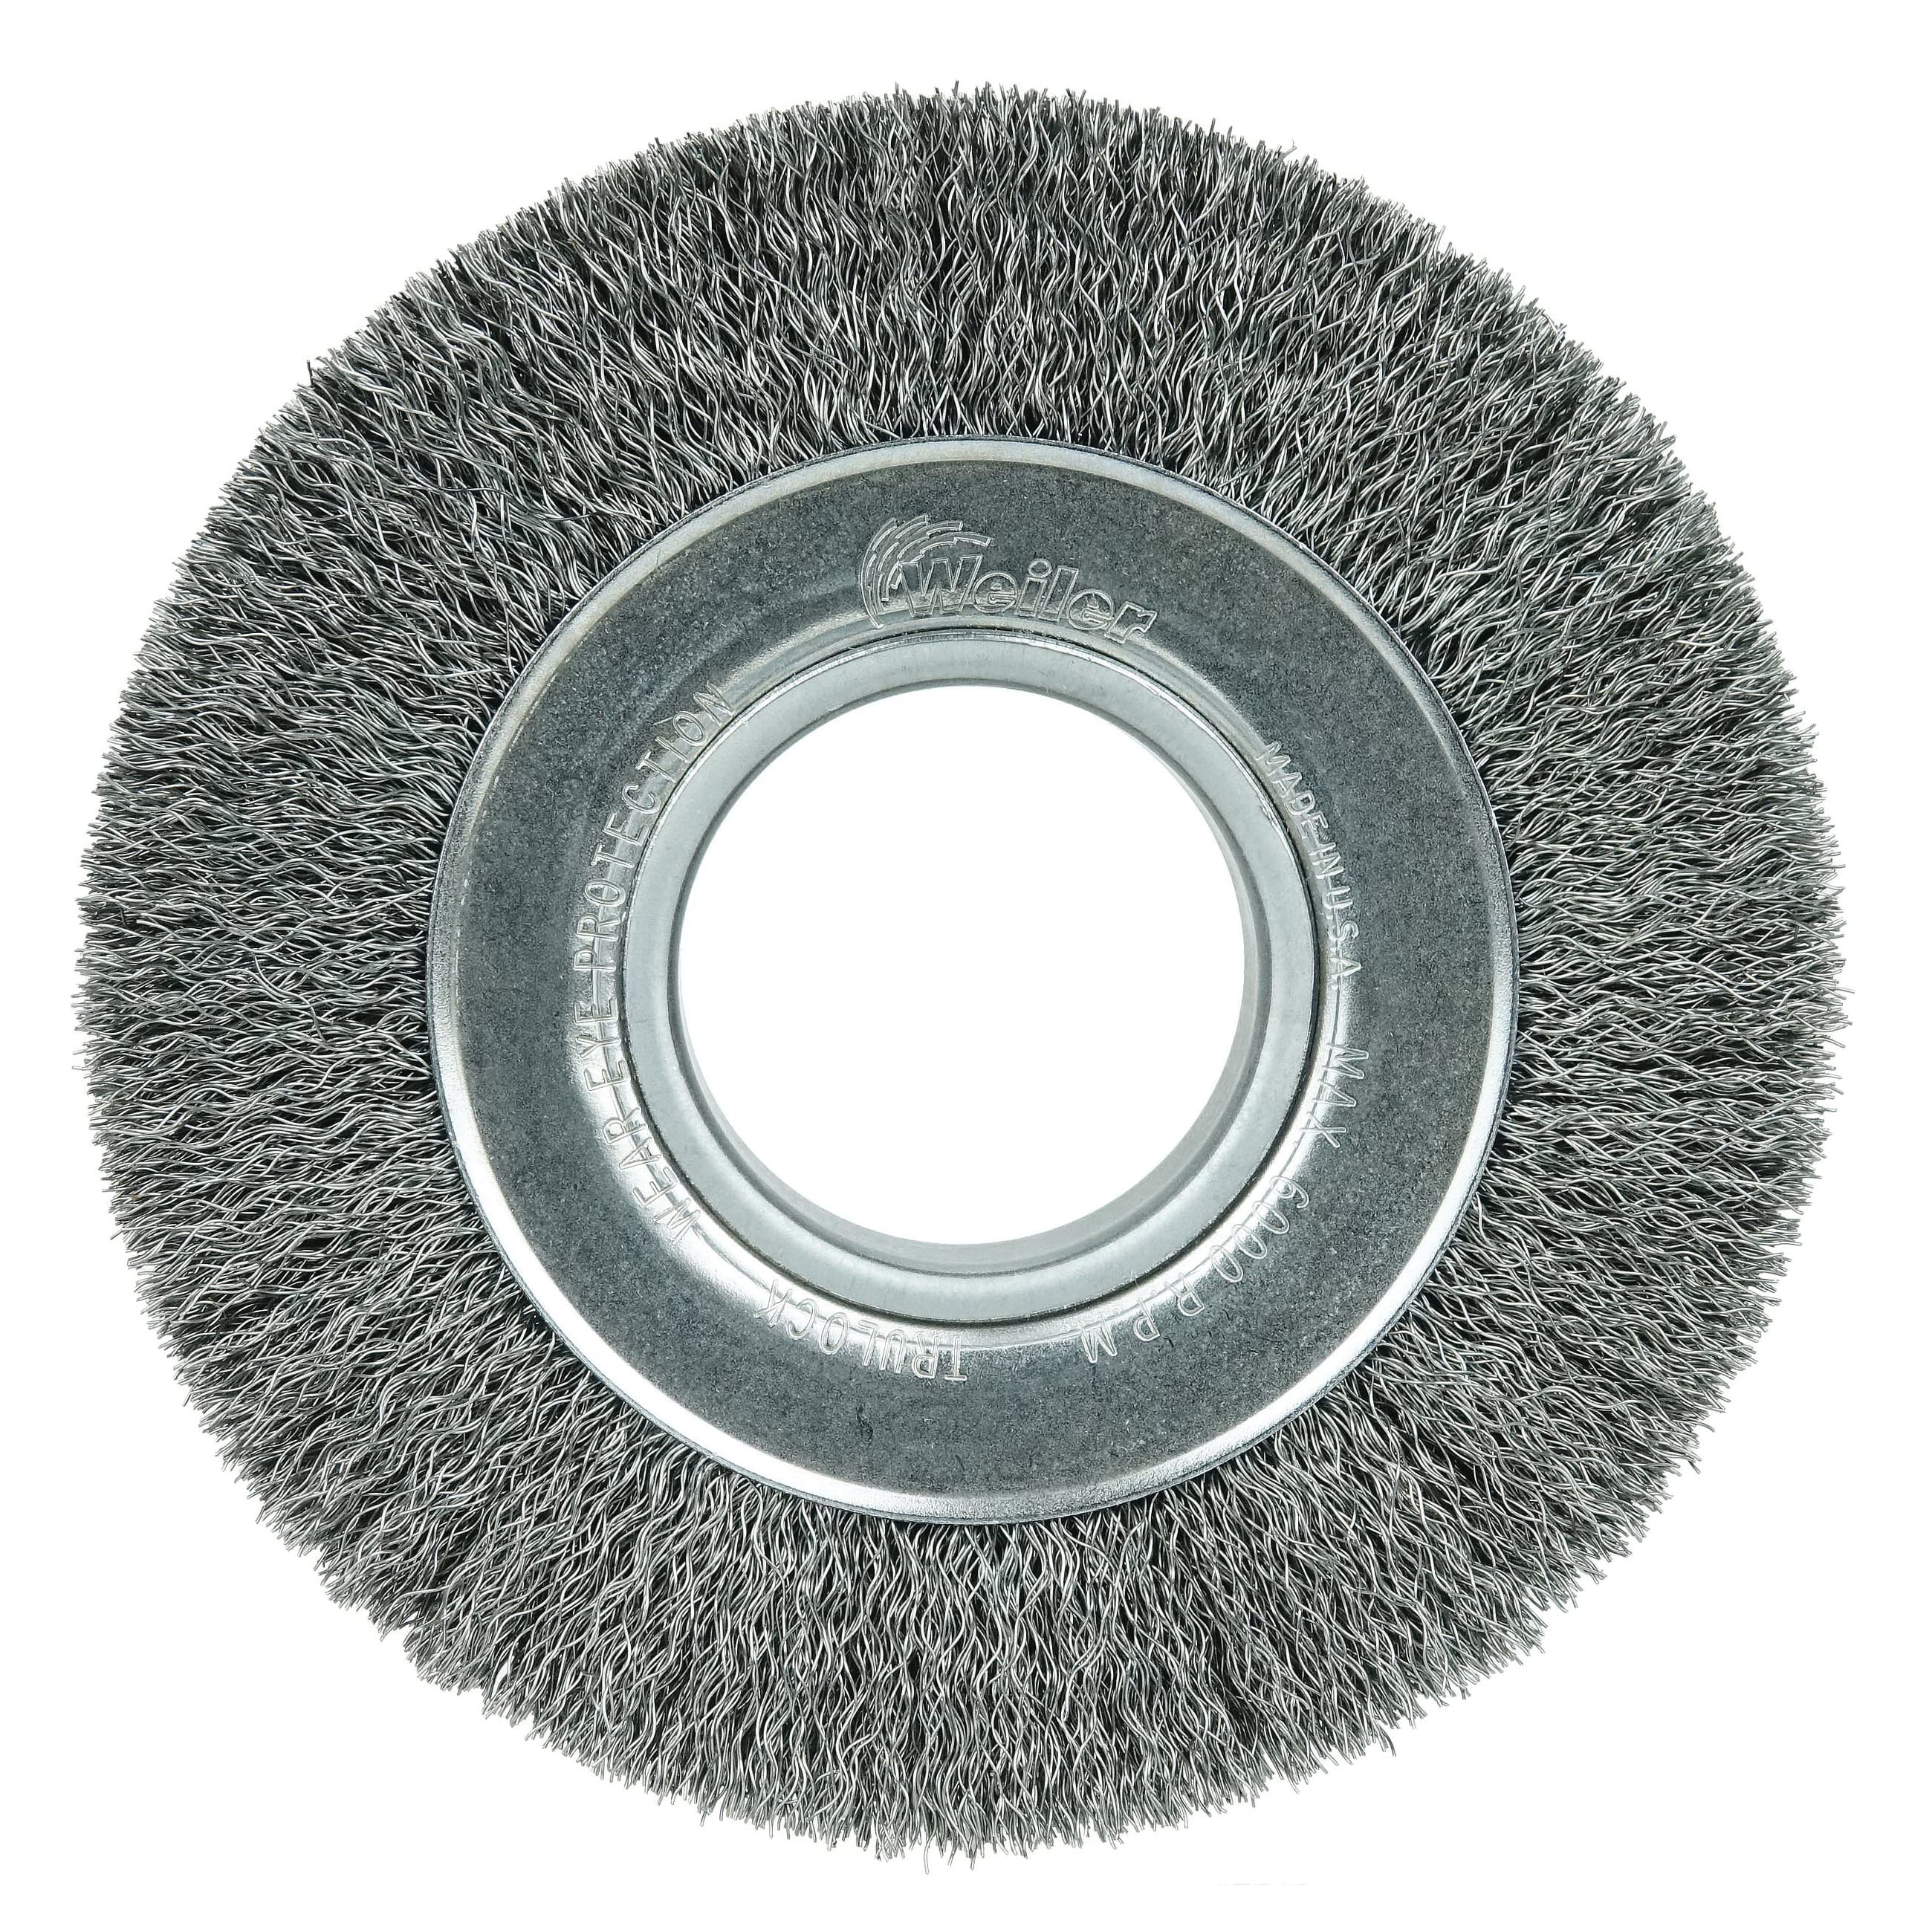 Weiler® 06080 Medium Face Wheel Brush, 6 in Dia Brush, 1 in W Face, 0.014 in Dia Crimped Filament/Wire, 2 in Arbor Hole